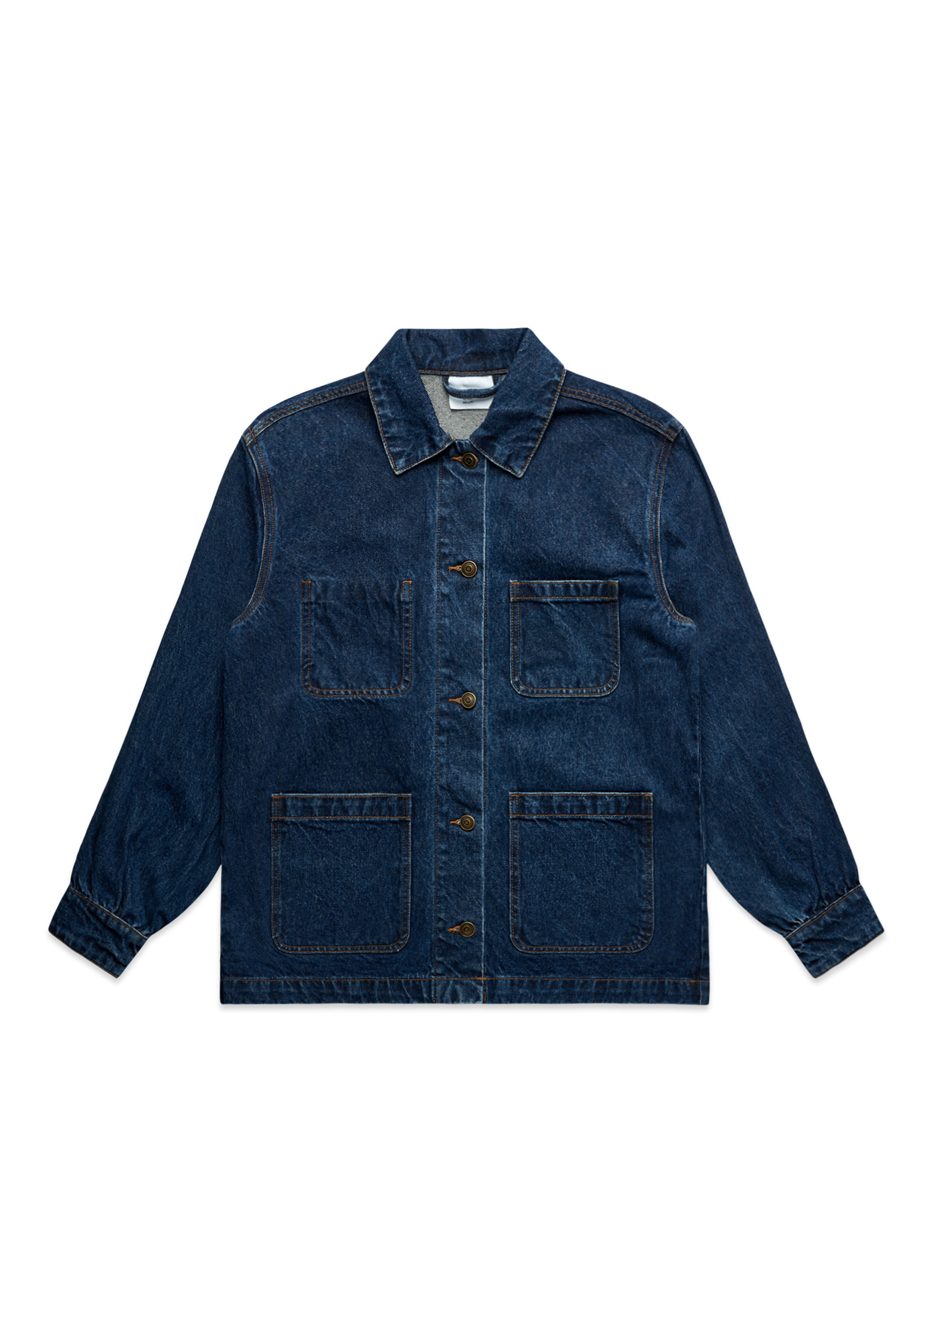 J.Crew: Denim Chore Jacket In Bandana Paisley For Women | Chore jacket,  Jackets, Denim